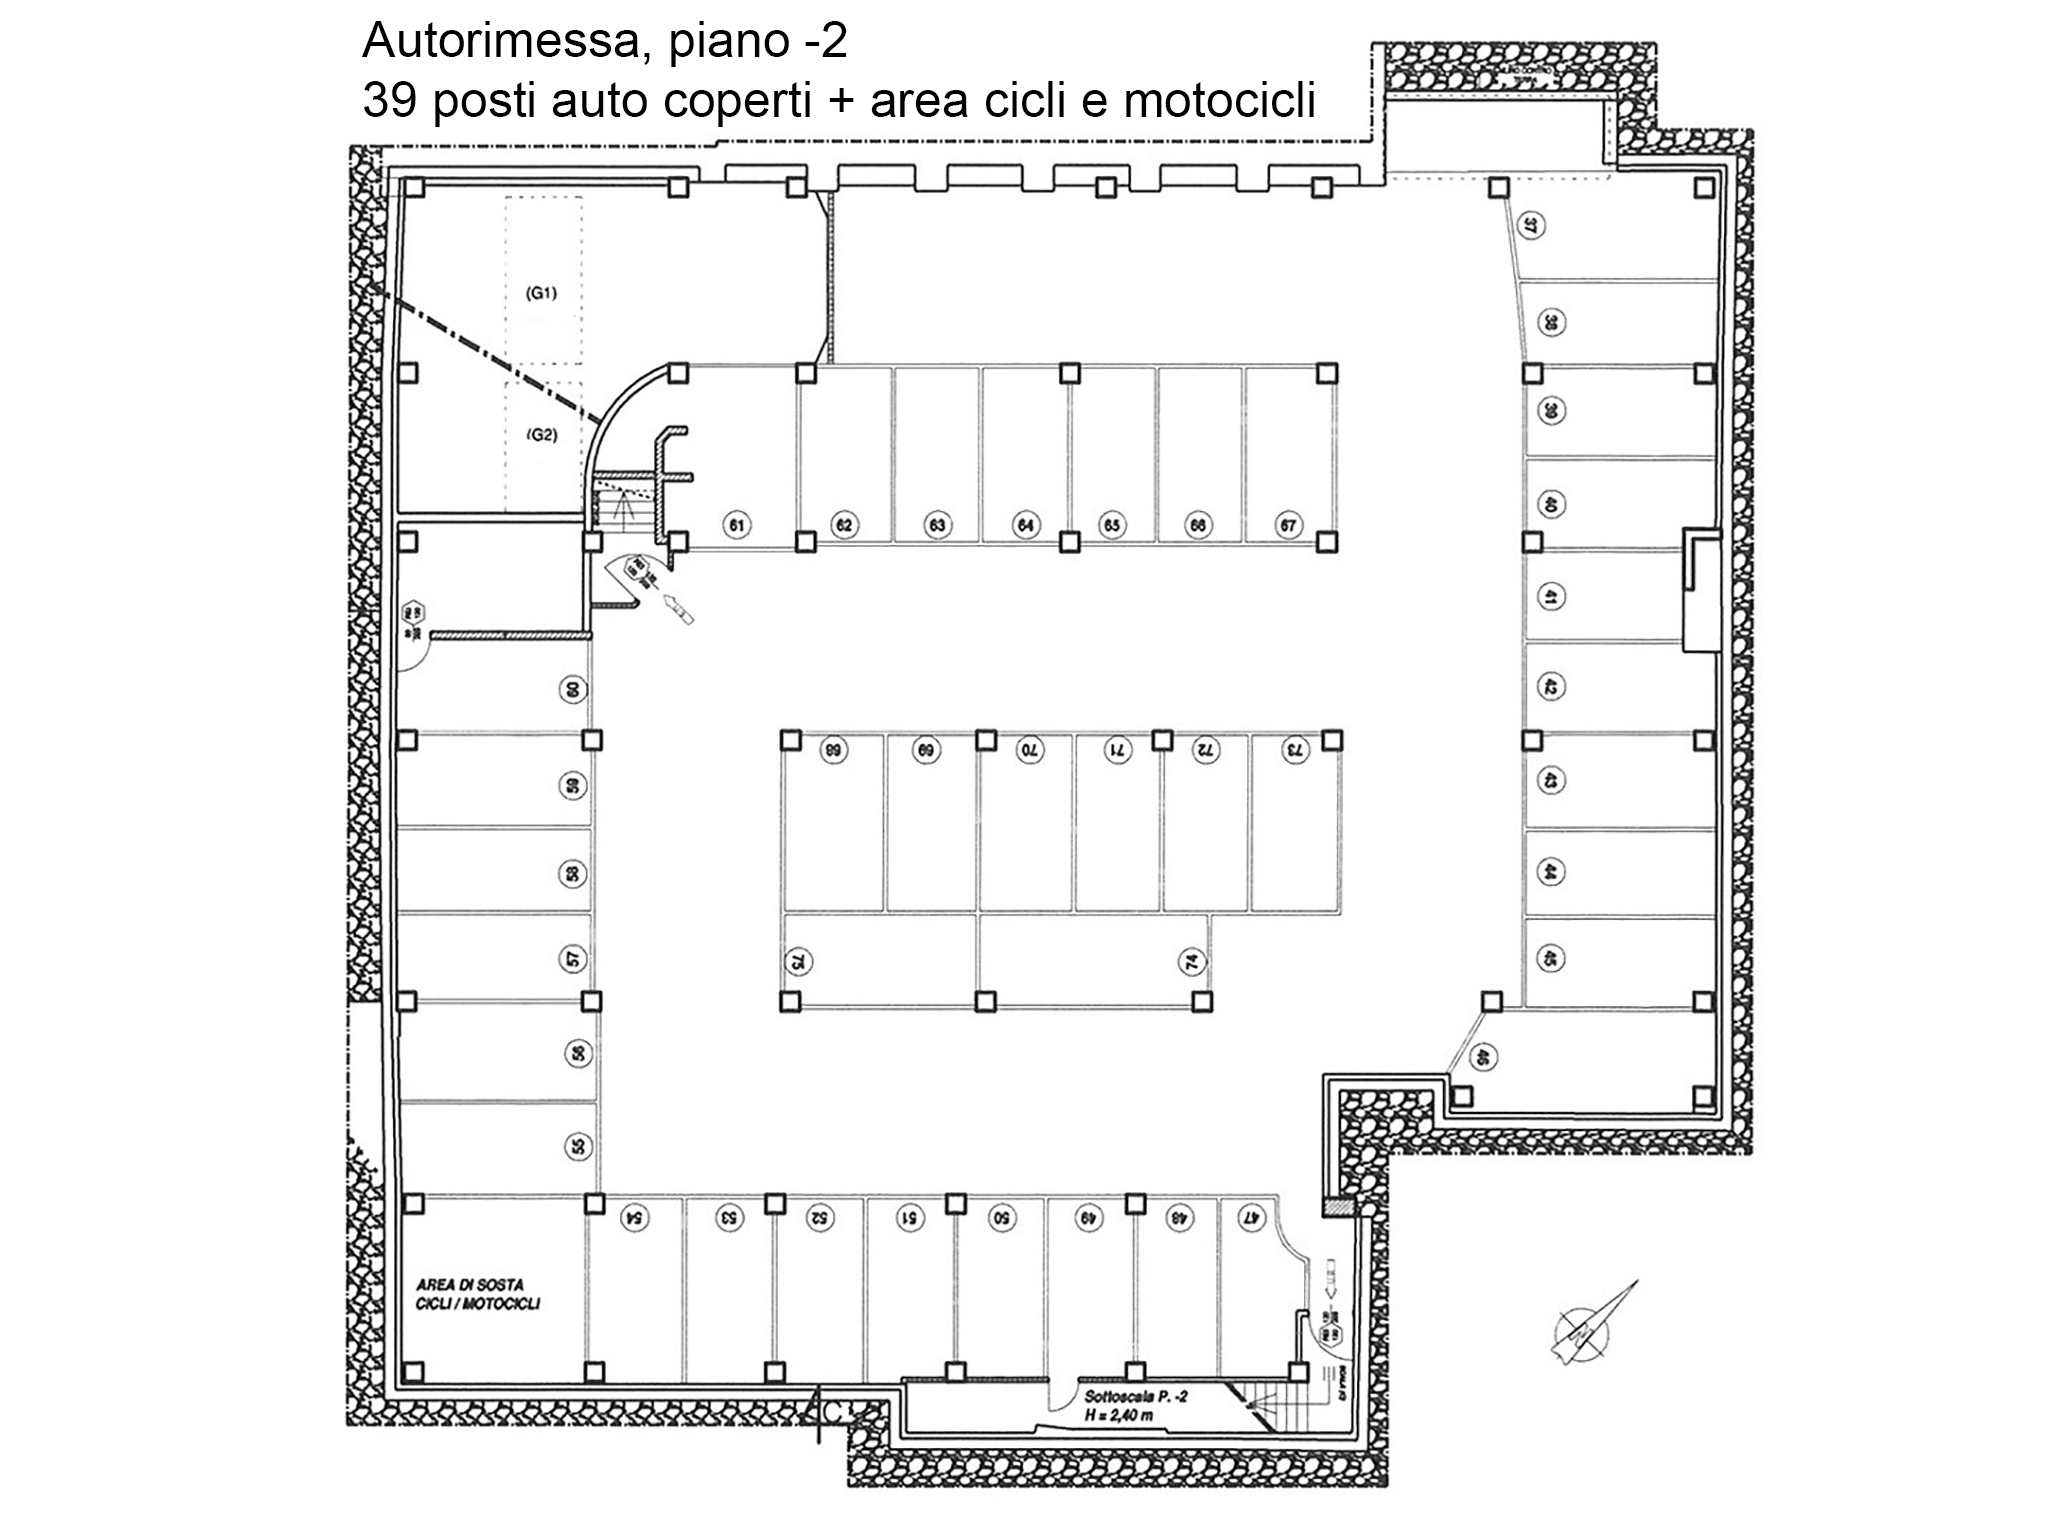 Floor plan of the garage at the second basement floor - Atlantic Business Center - Milan